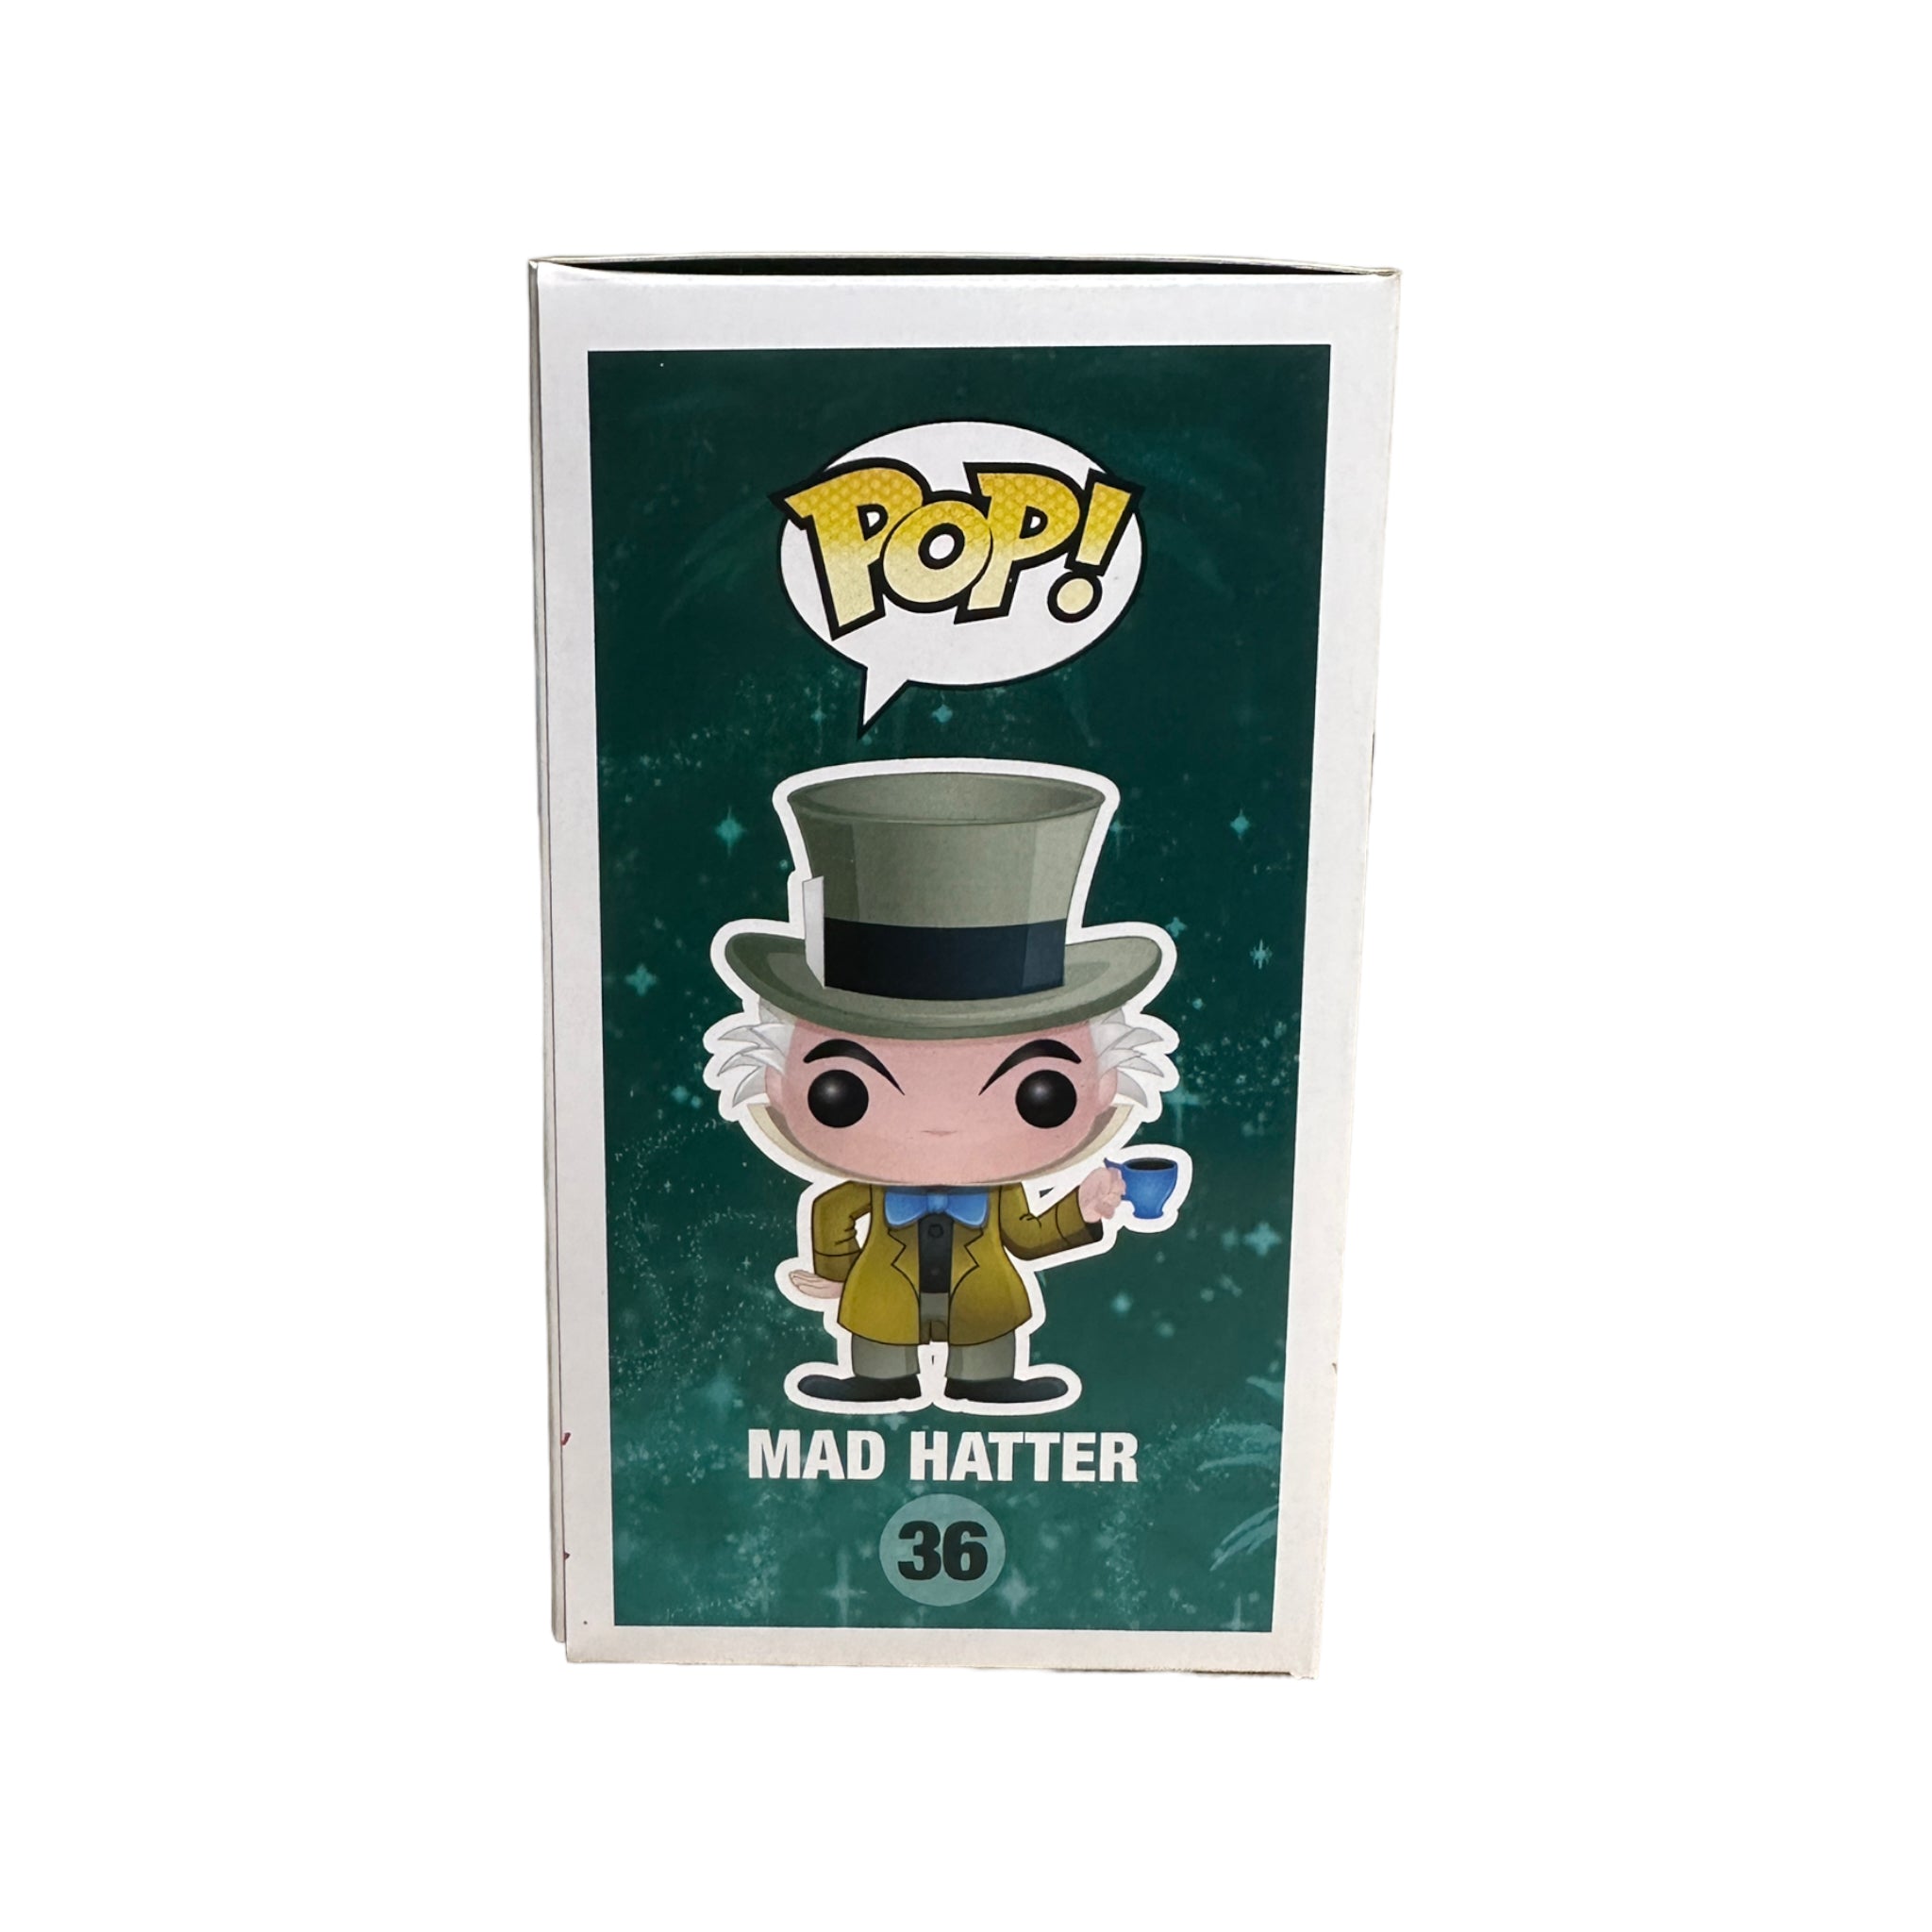 Mad Hatter #36 Funko Pop! - Disney Series 3 - Condition 8.5/10